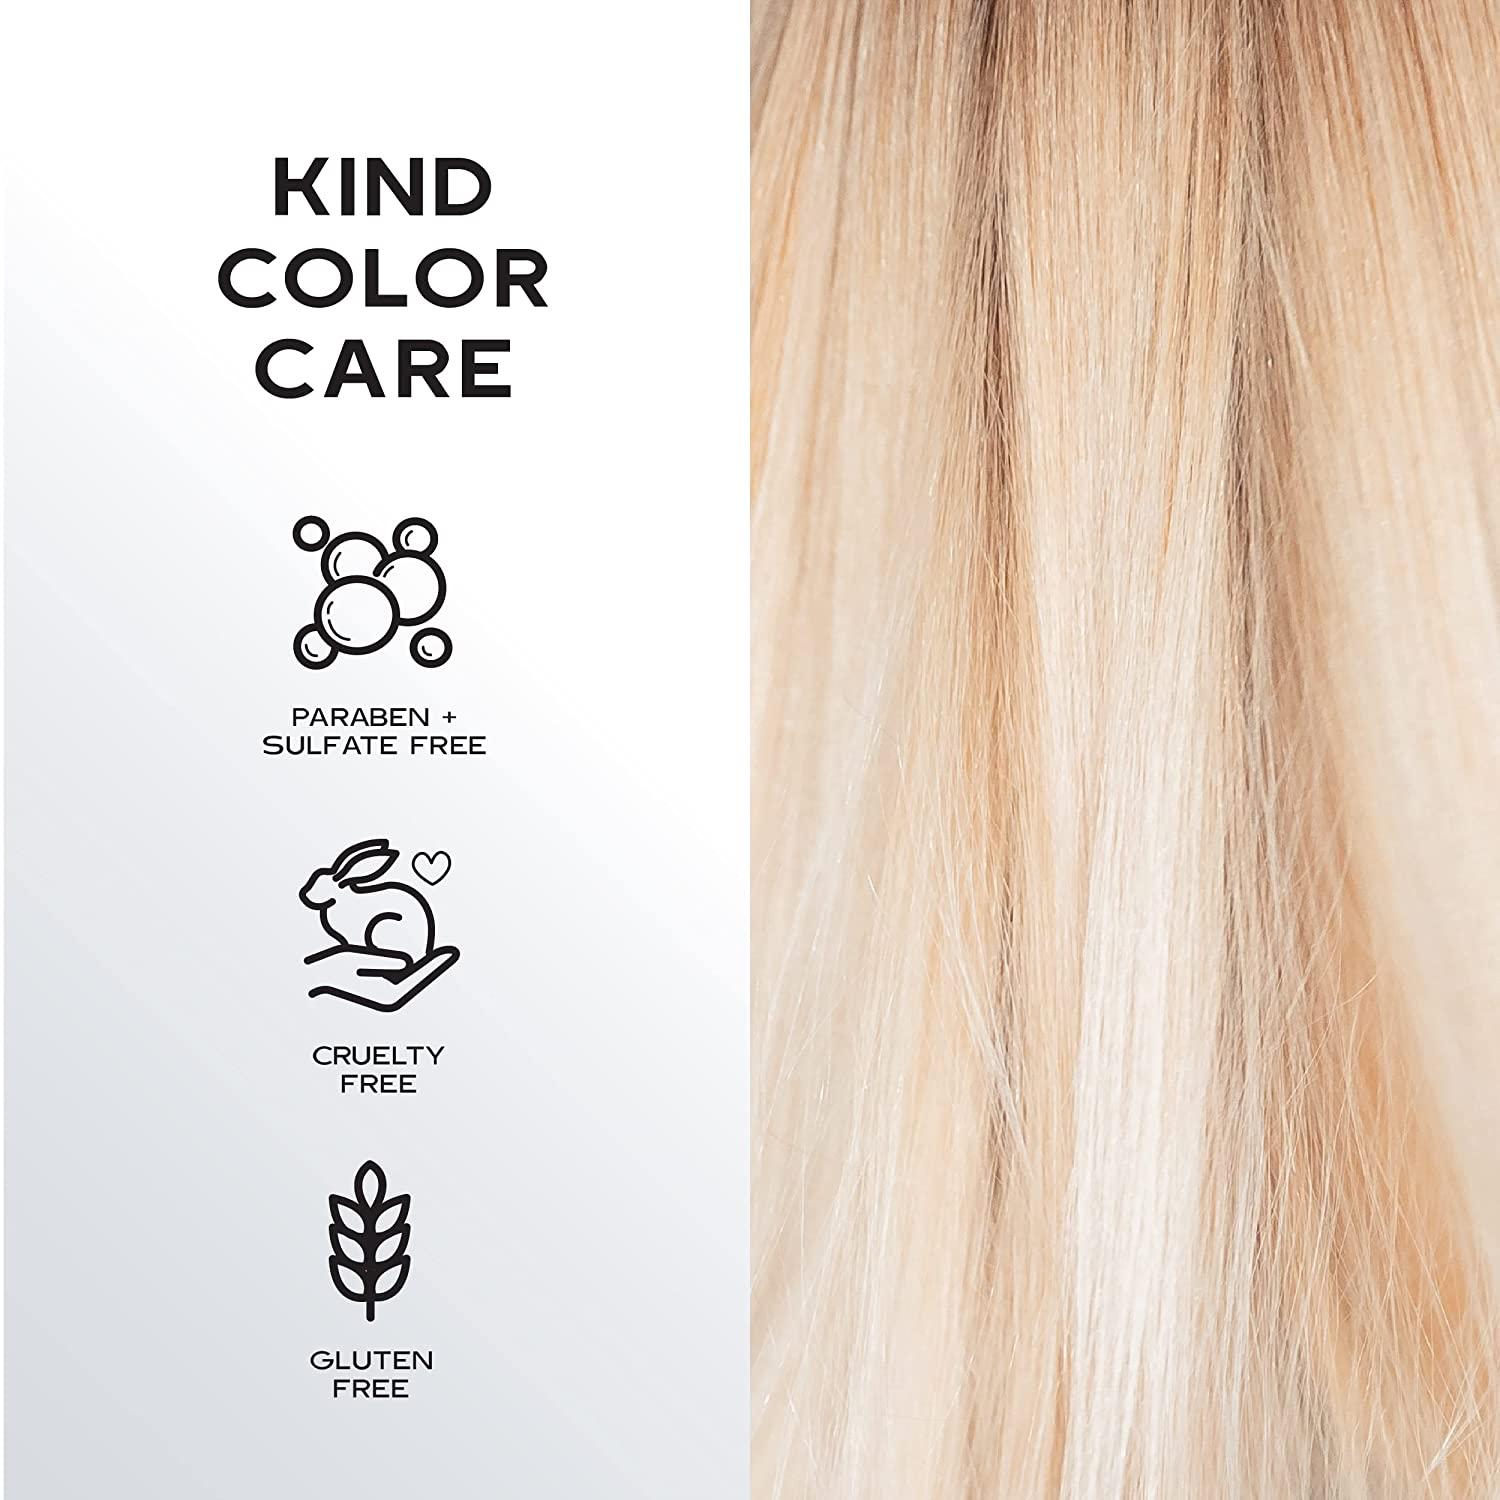 Keracolor Keracanvas Hair Bleach Kit - Complete Hair Lightening & Toning  System, 1 Kit